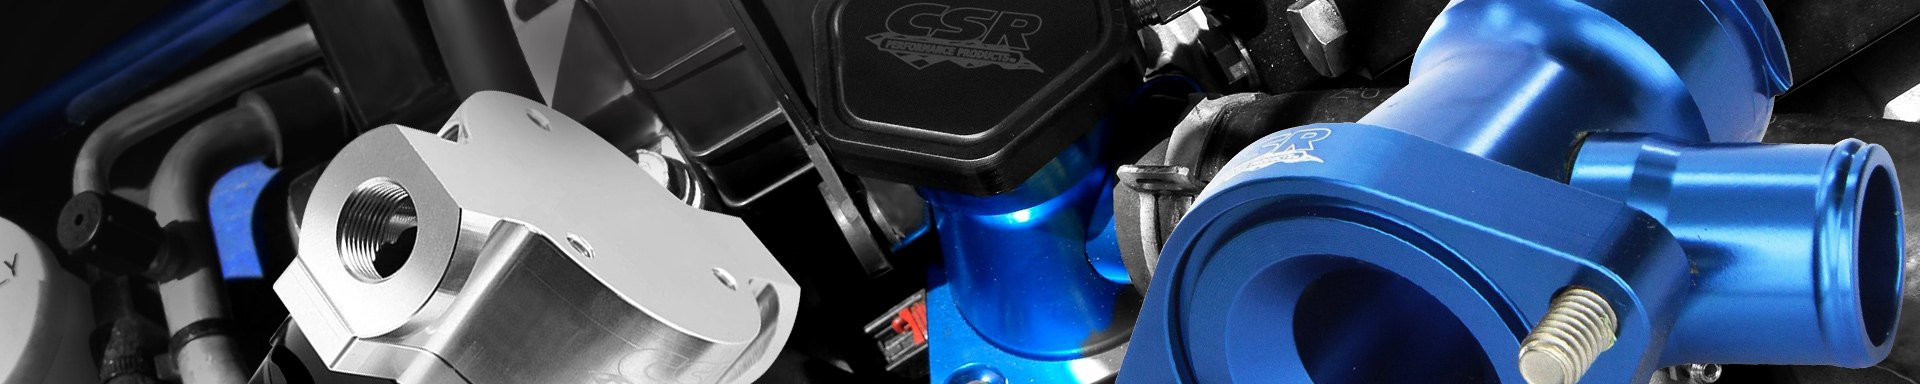 CSR Performance Engine Cooling